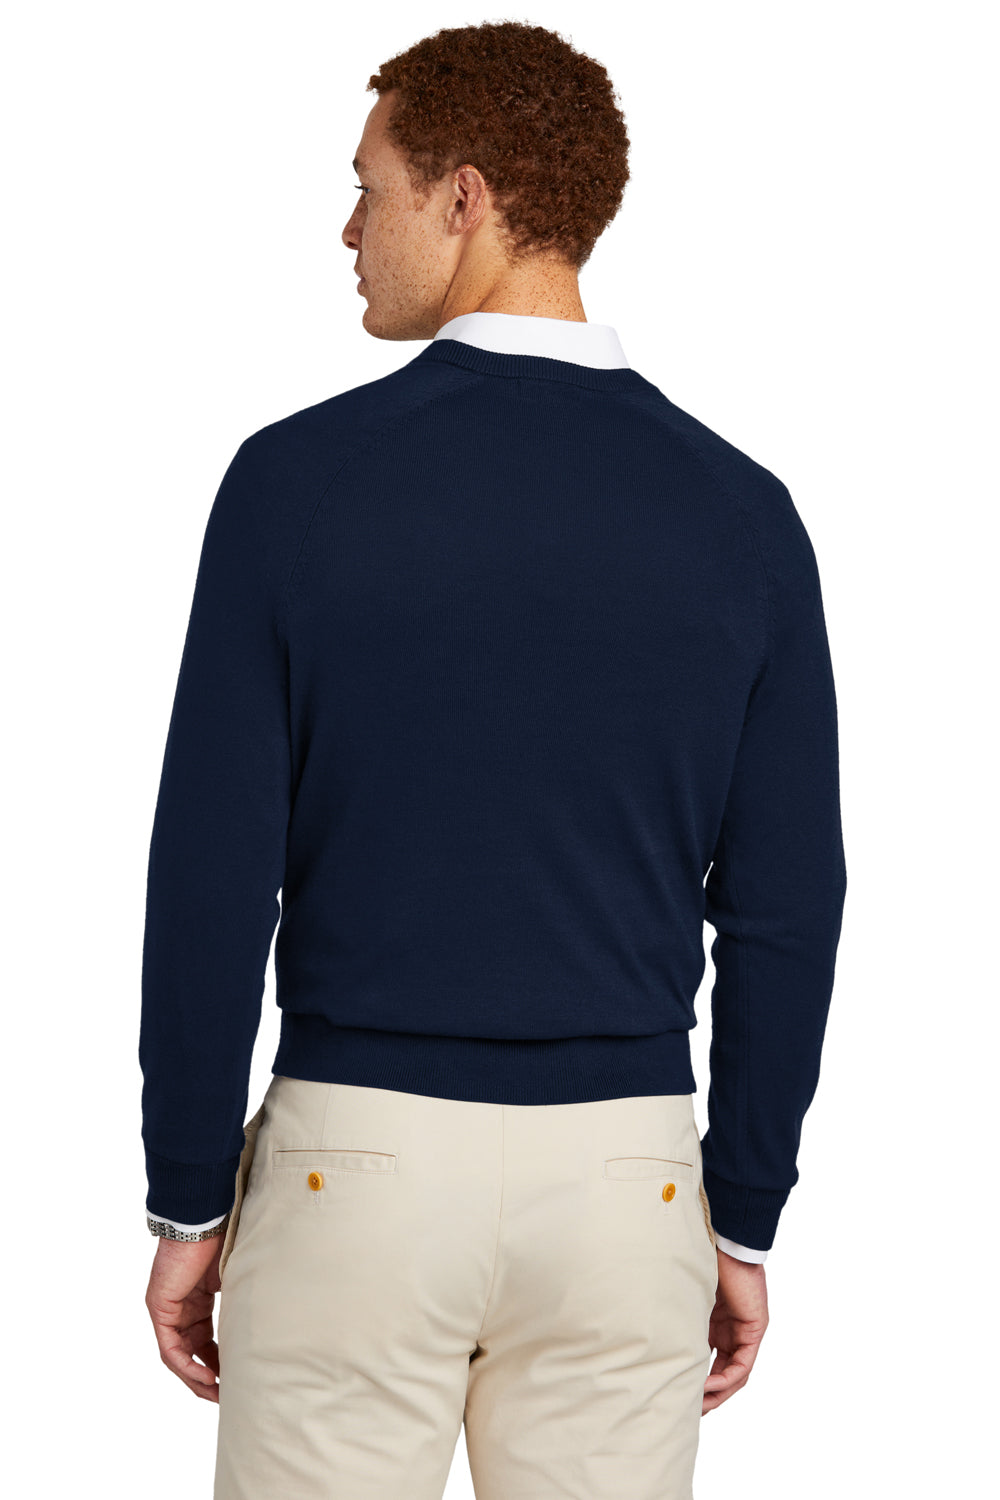 Brooks Brothers Mens Long Sleeve V-Neck Sweater Navy Blue Model Back